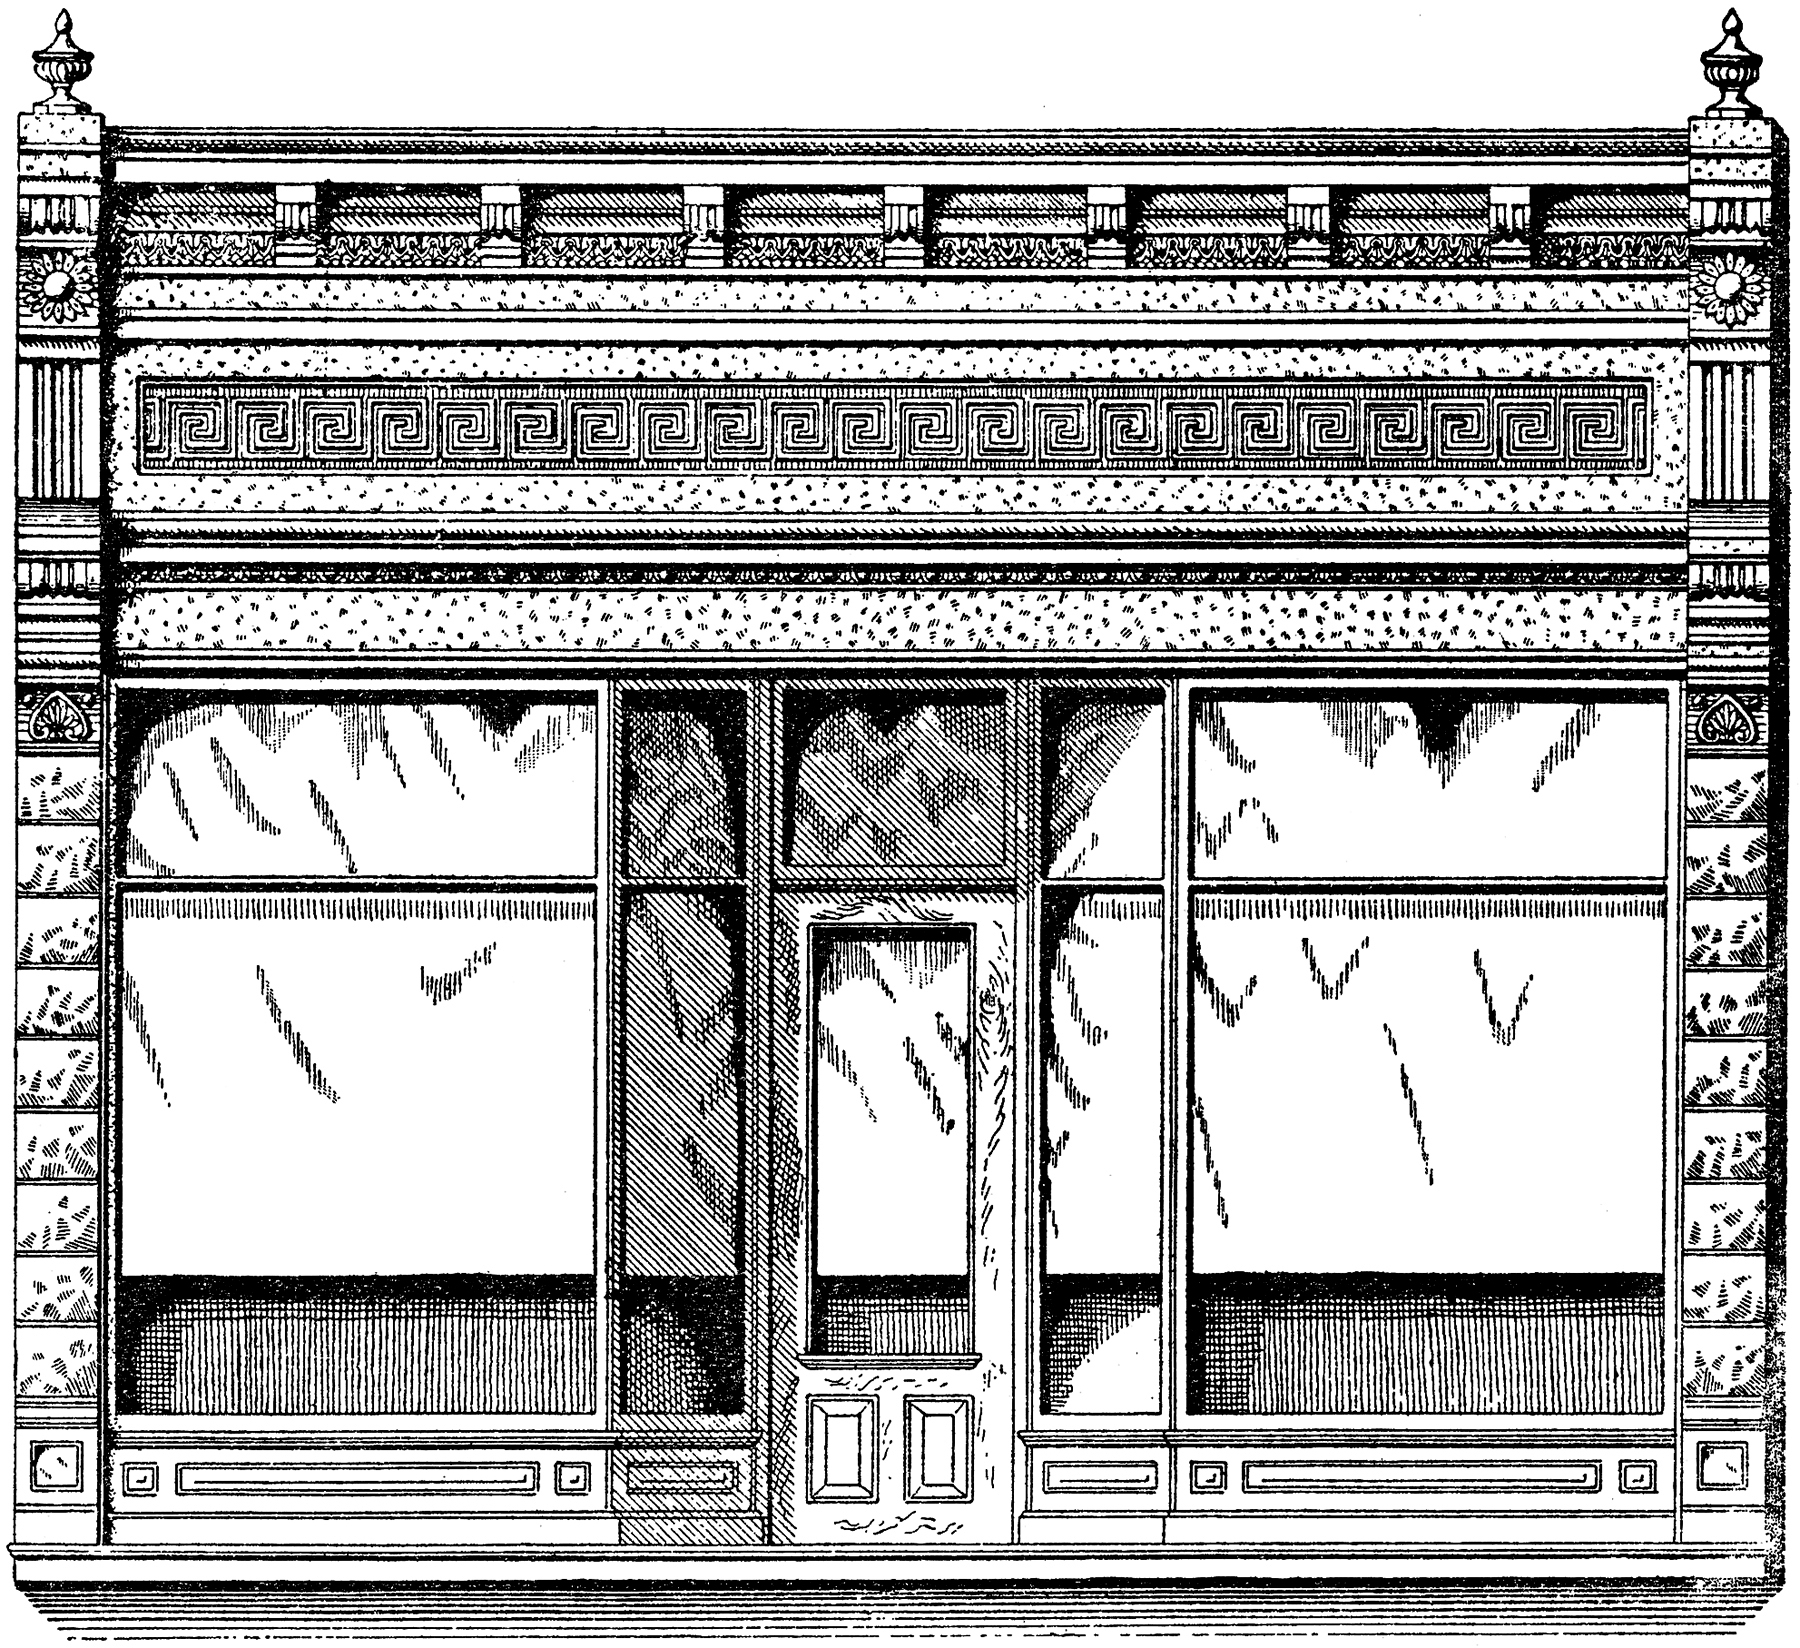 storefront illustration